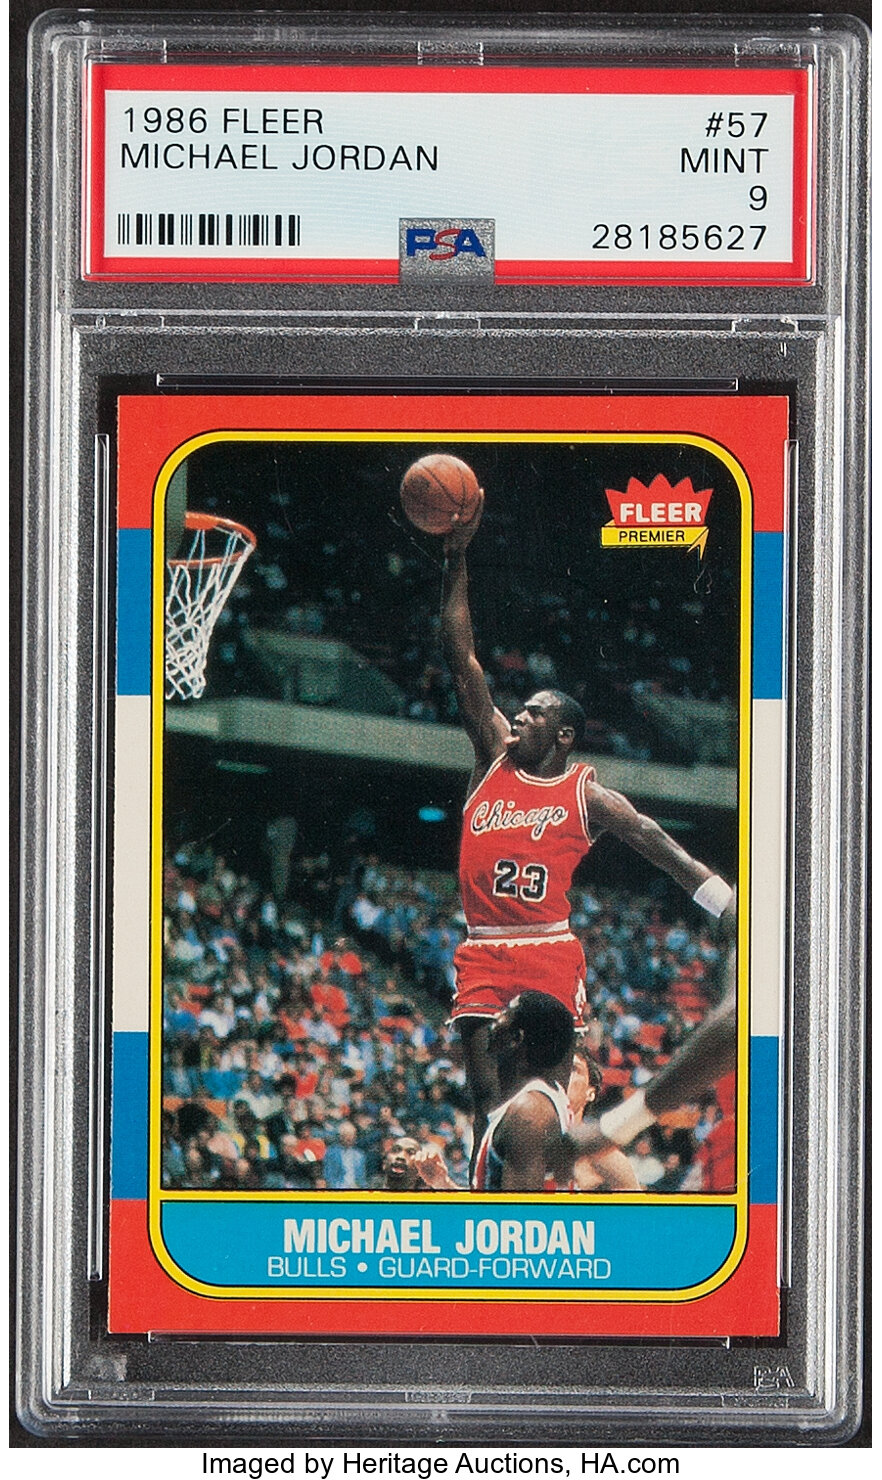 NBA: Has the bubble burst on Michael Jordan's iconic 1986 Fleer rookie card?